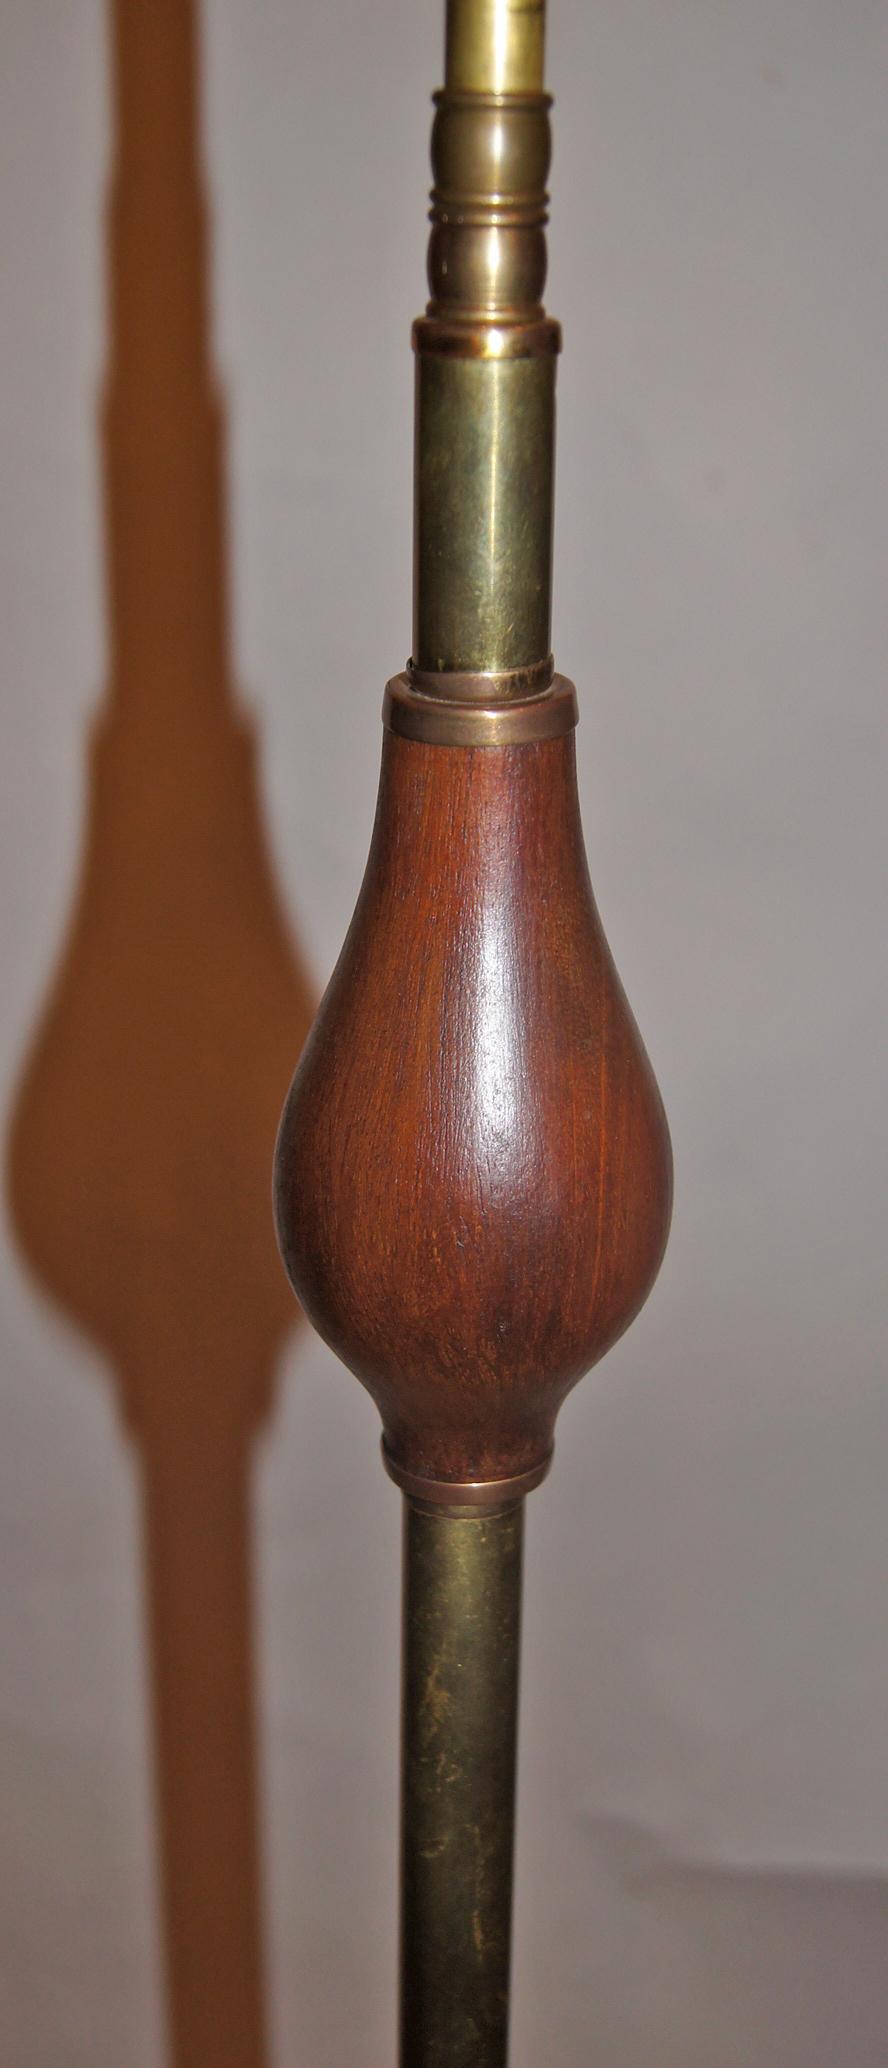 A circa 1940s Italian wood and bronze-metal floor lamp.

Measurements:
Height: 57